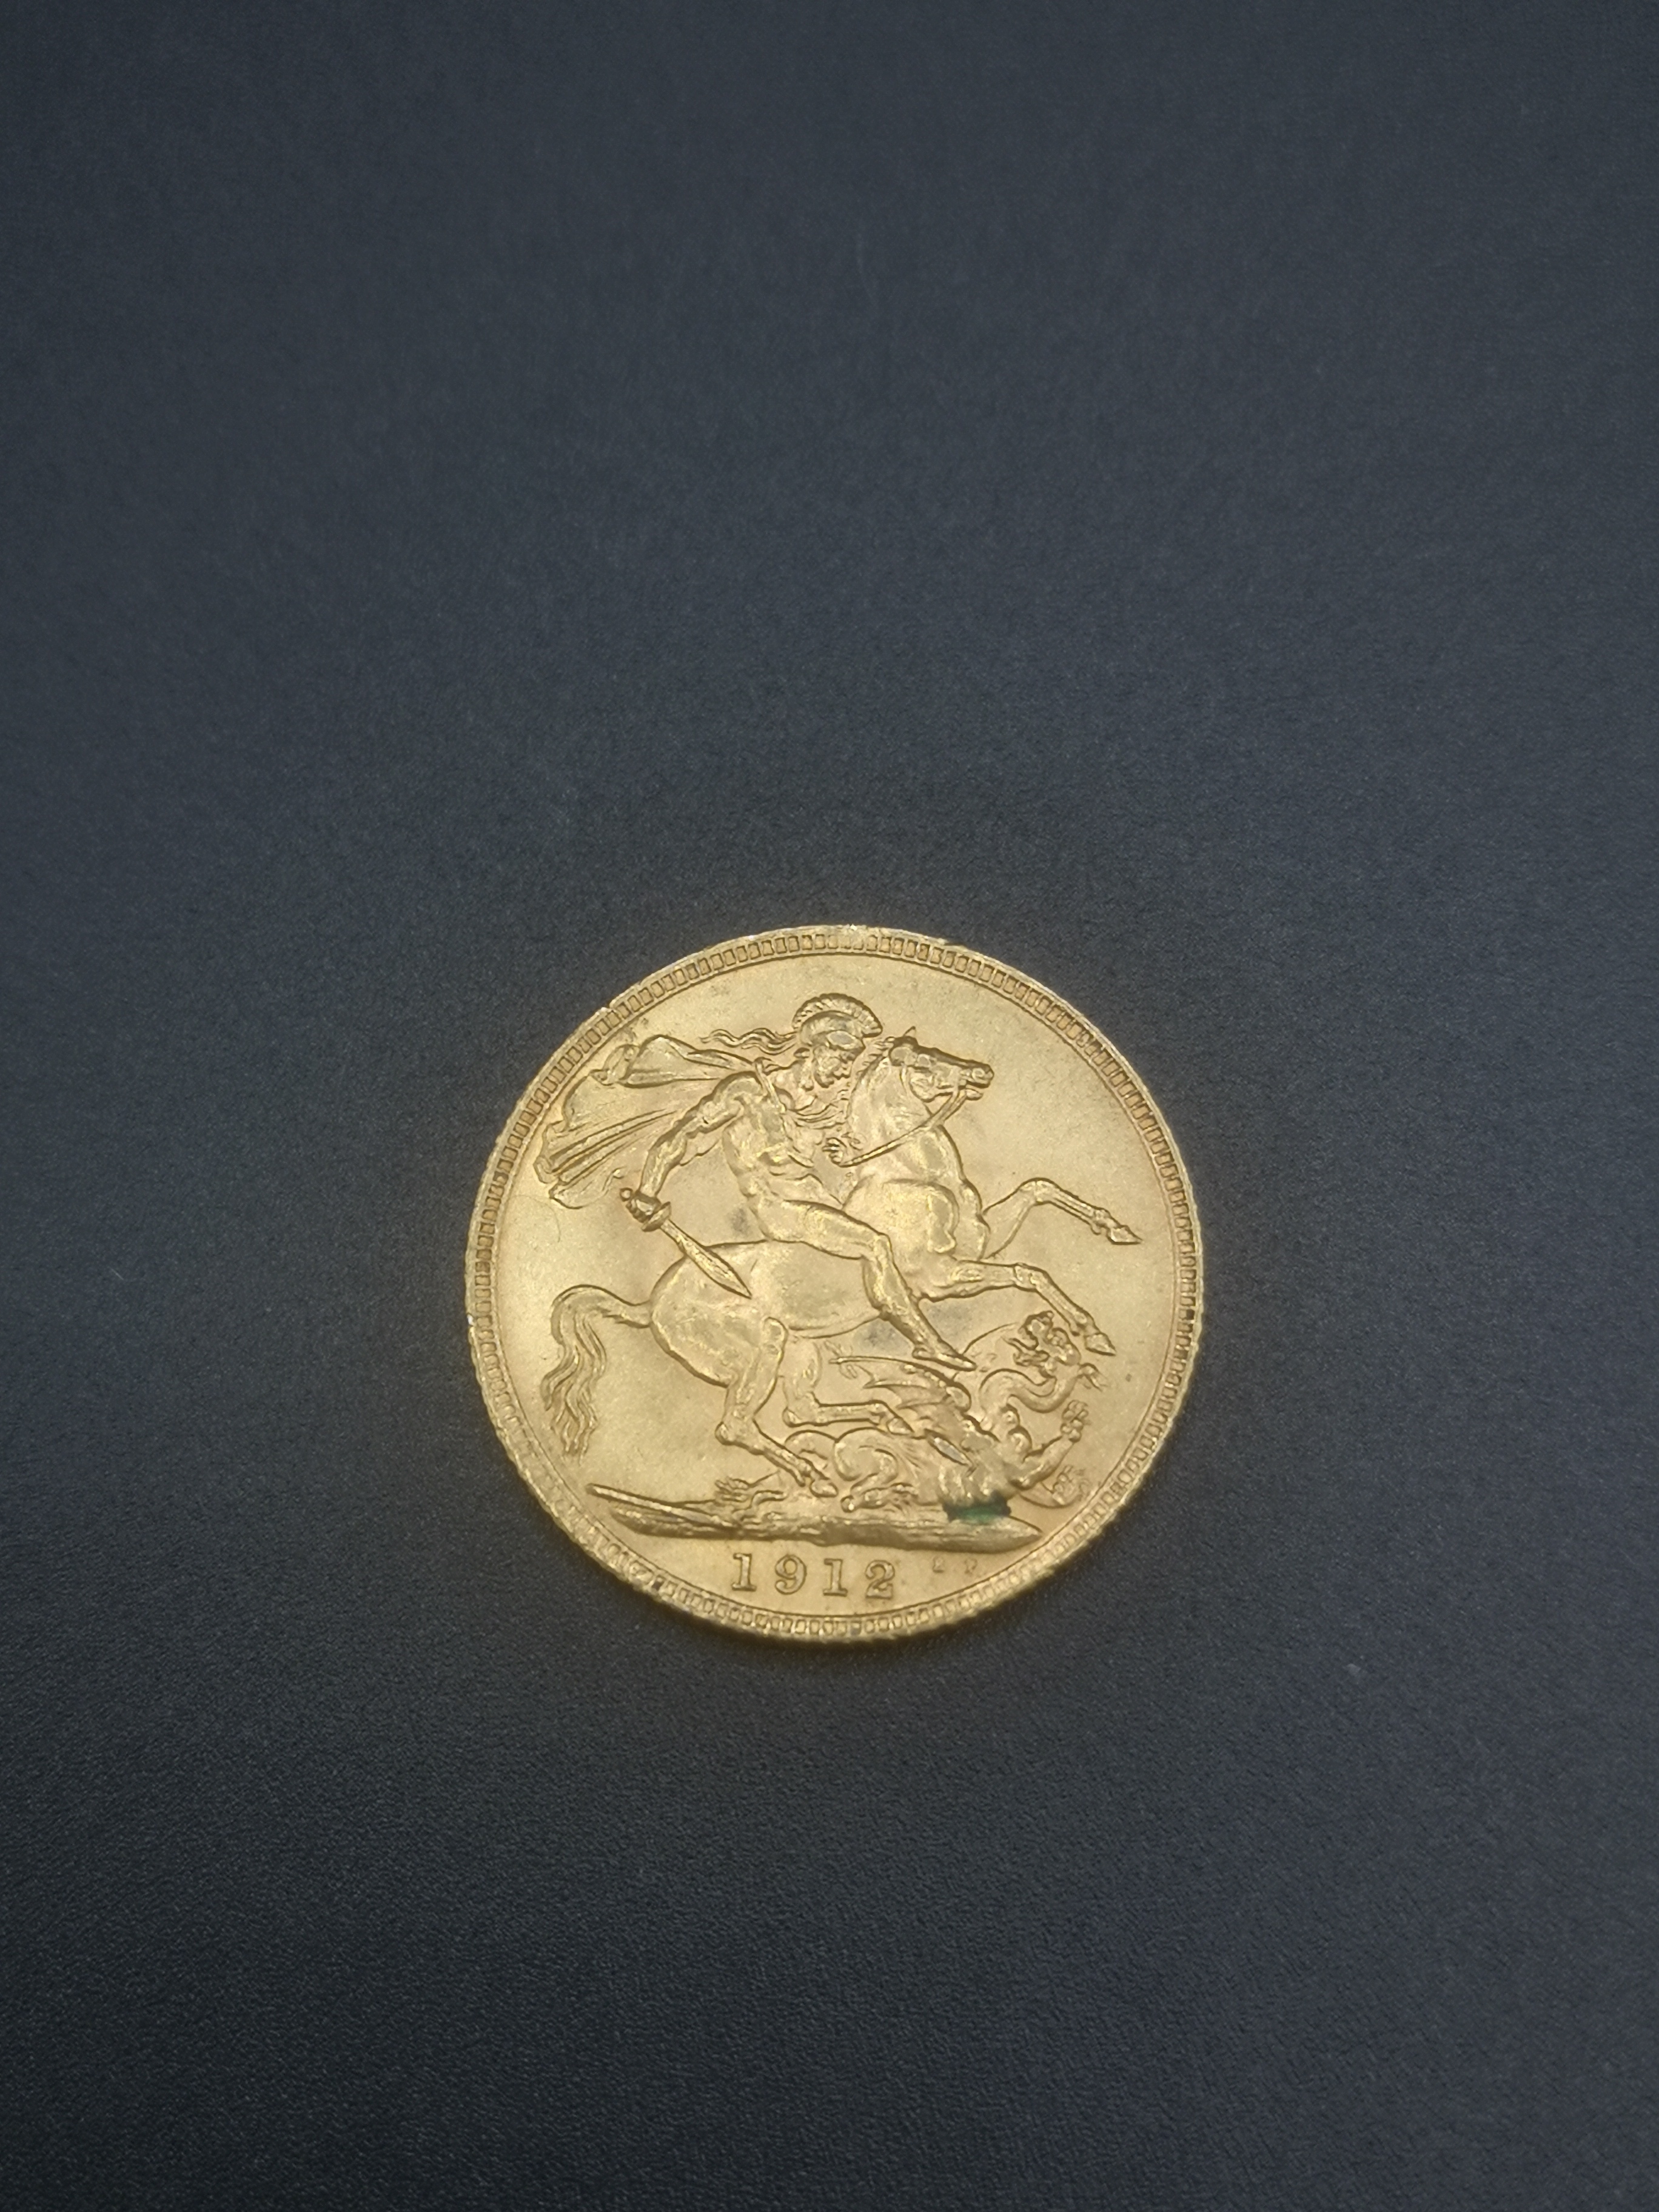 George V gold sovereign 1912 - Image 4 of 4